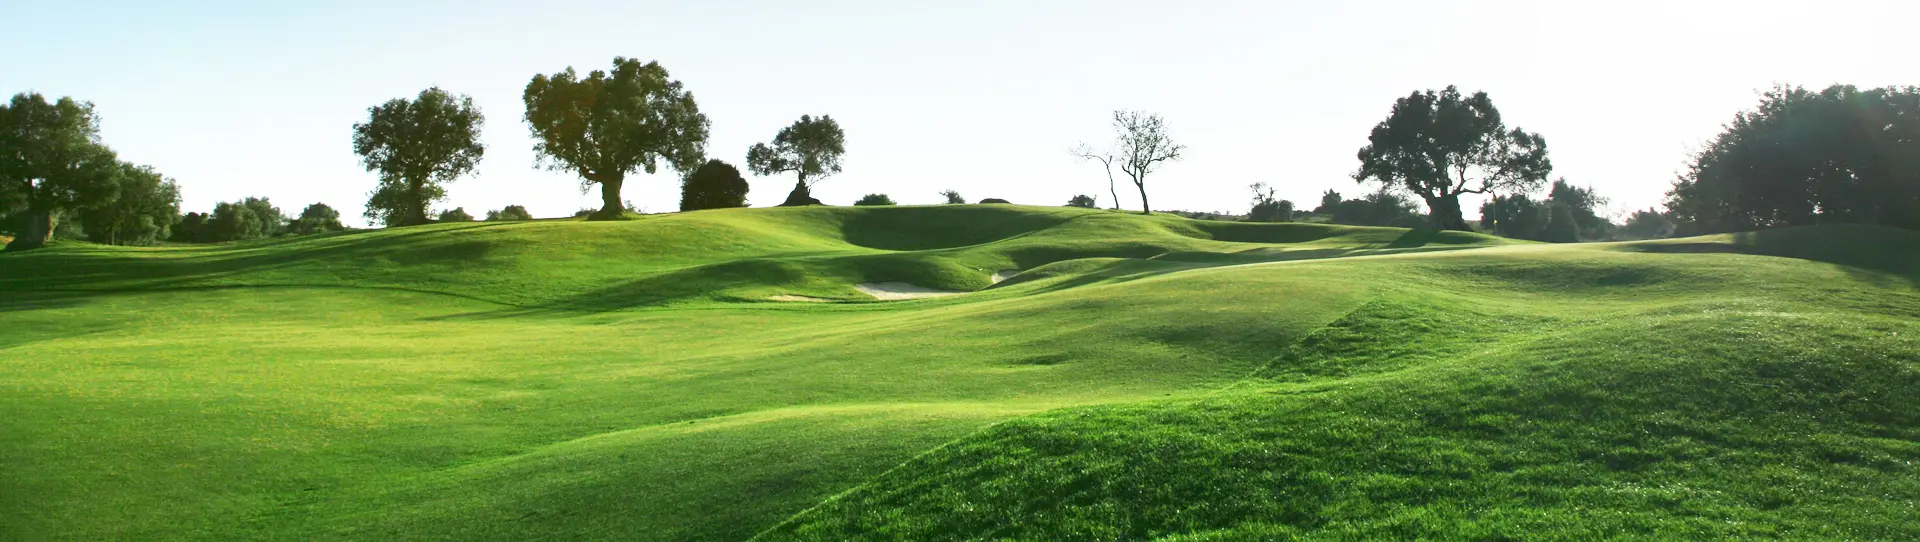 Portugal golf courses - Vale da Pinta Golf Course - Photo 2